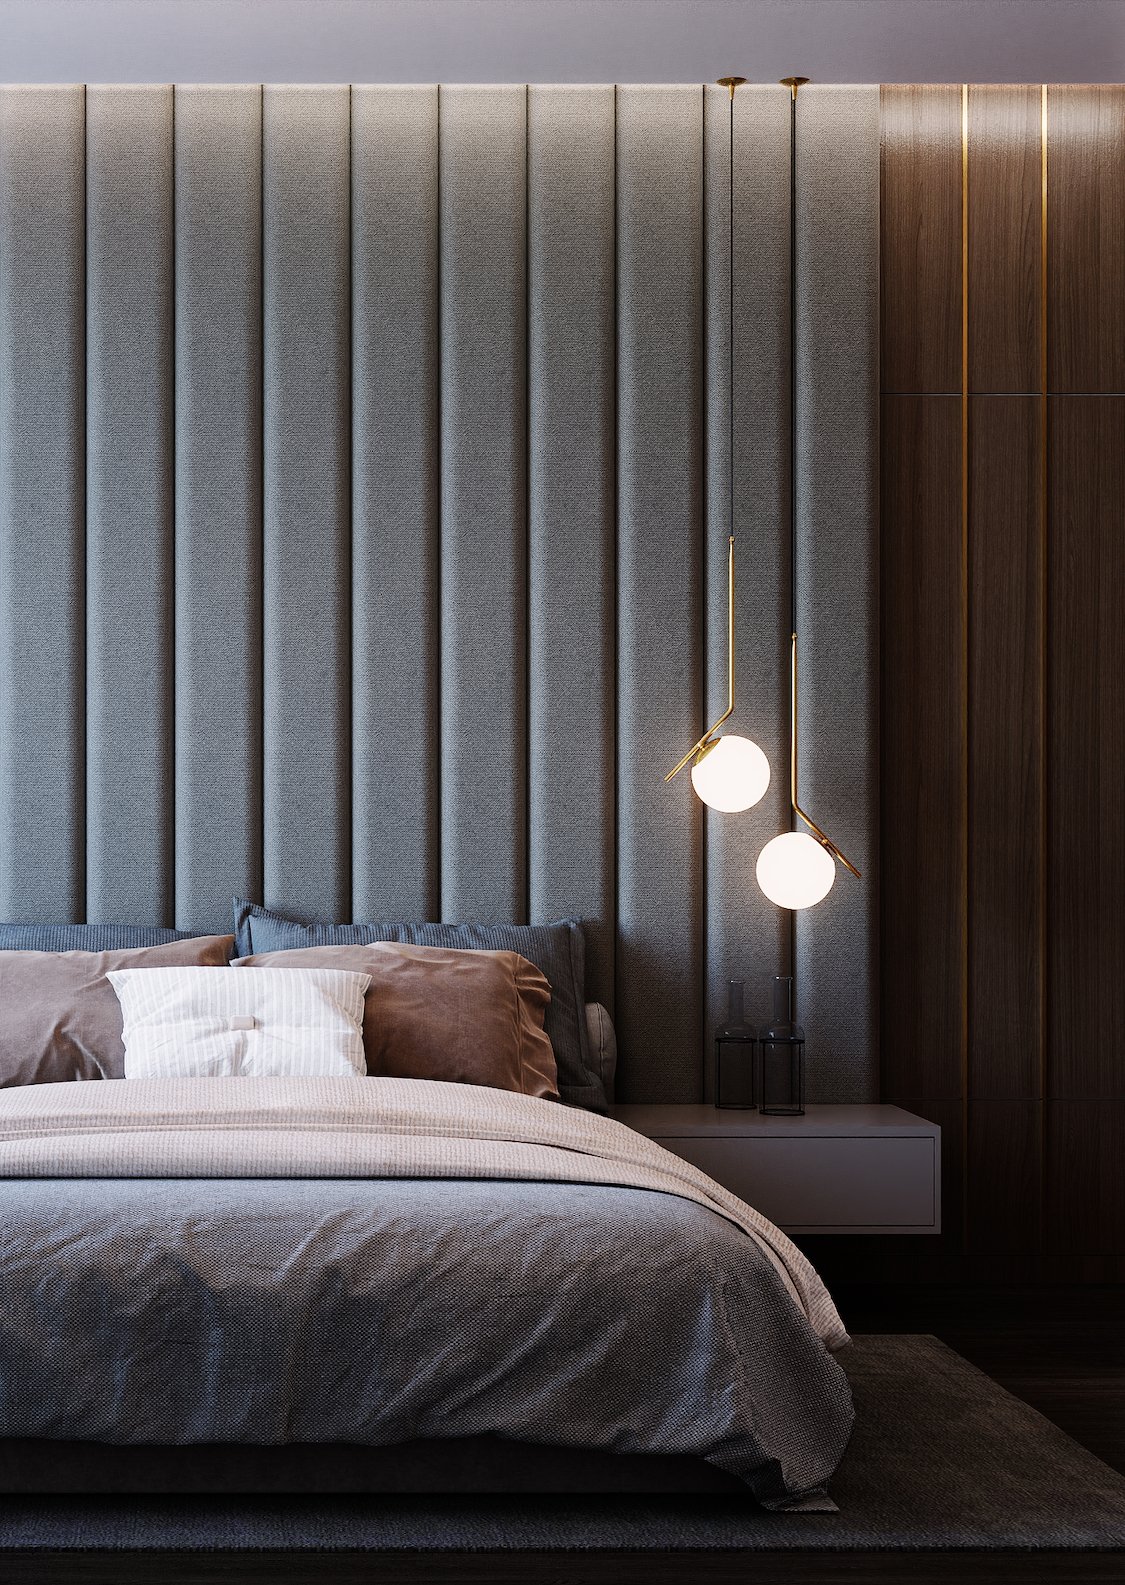 Modern bedroom by high end interior designers